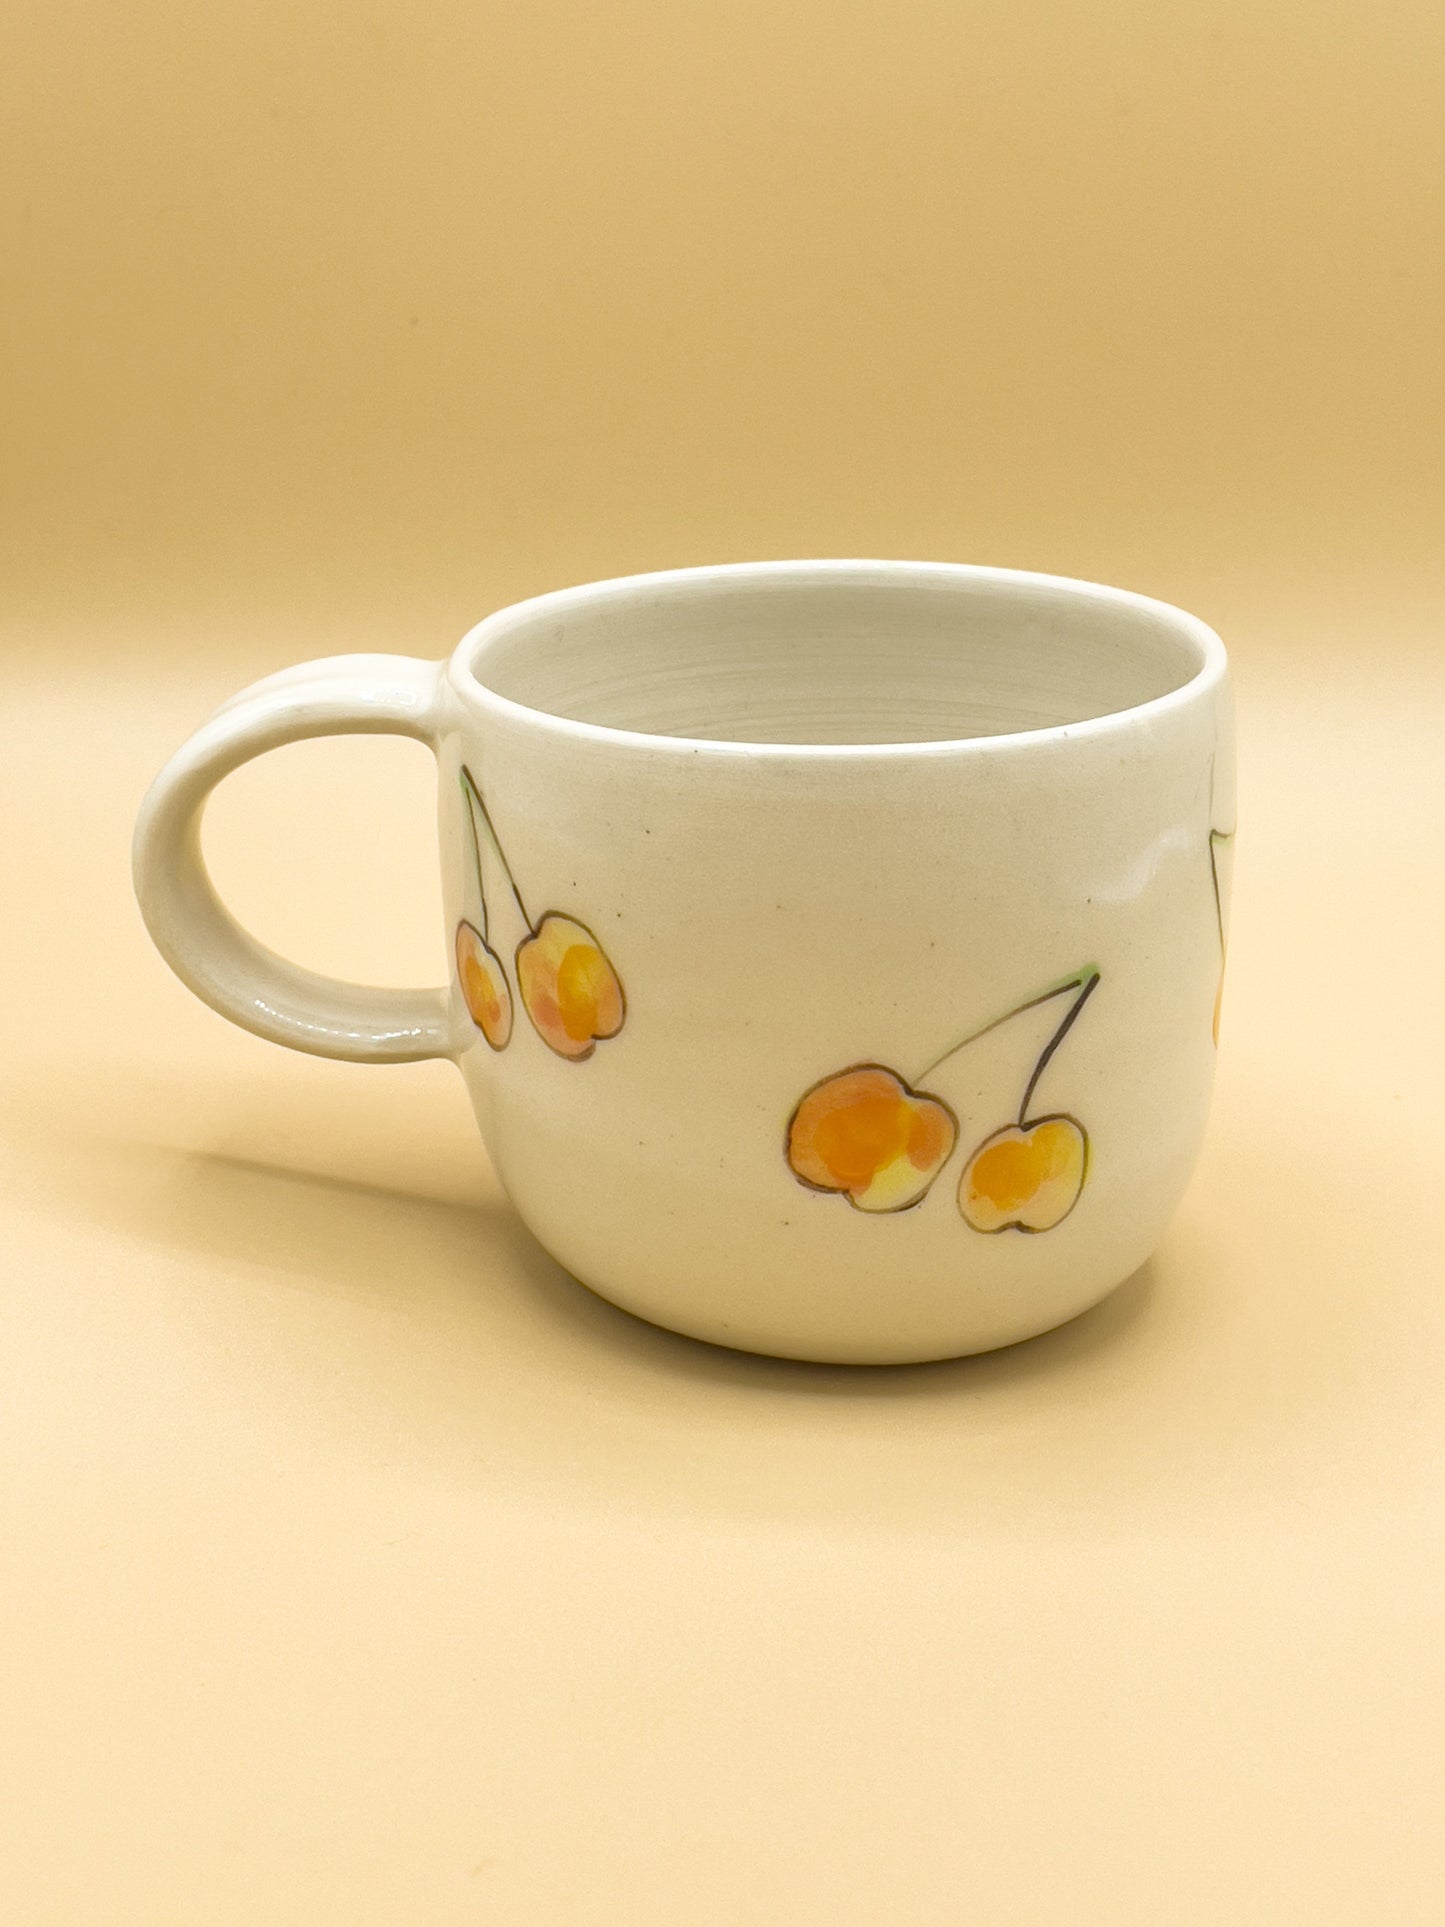 Rainier Cherry Illustrated Mug